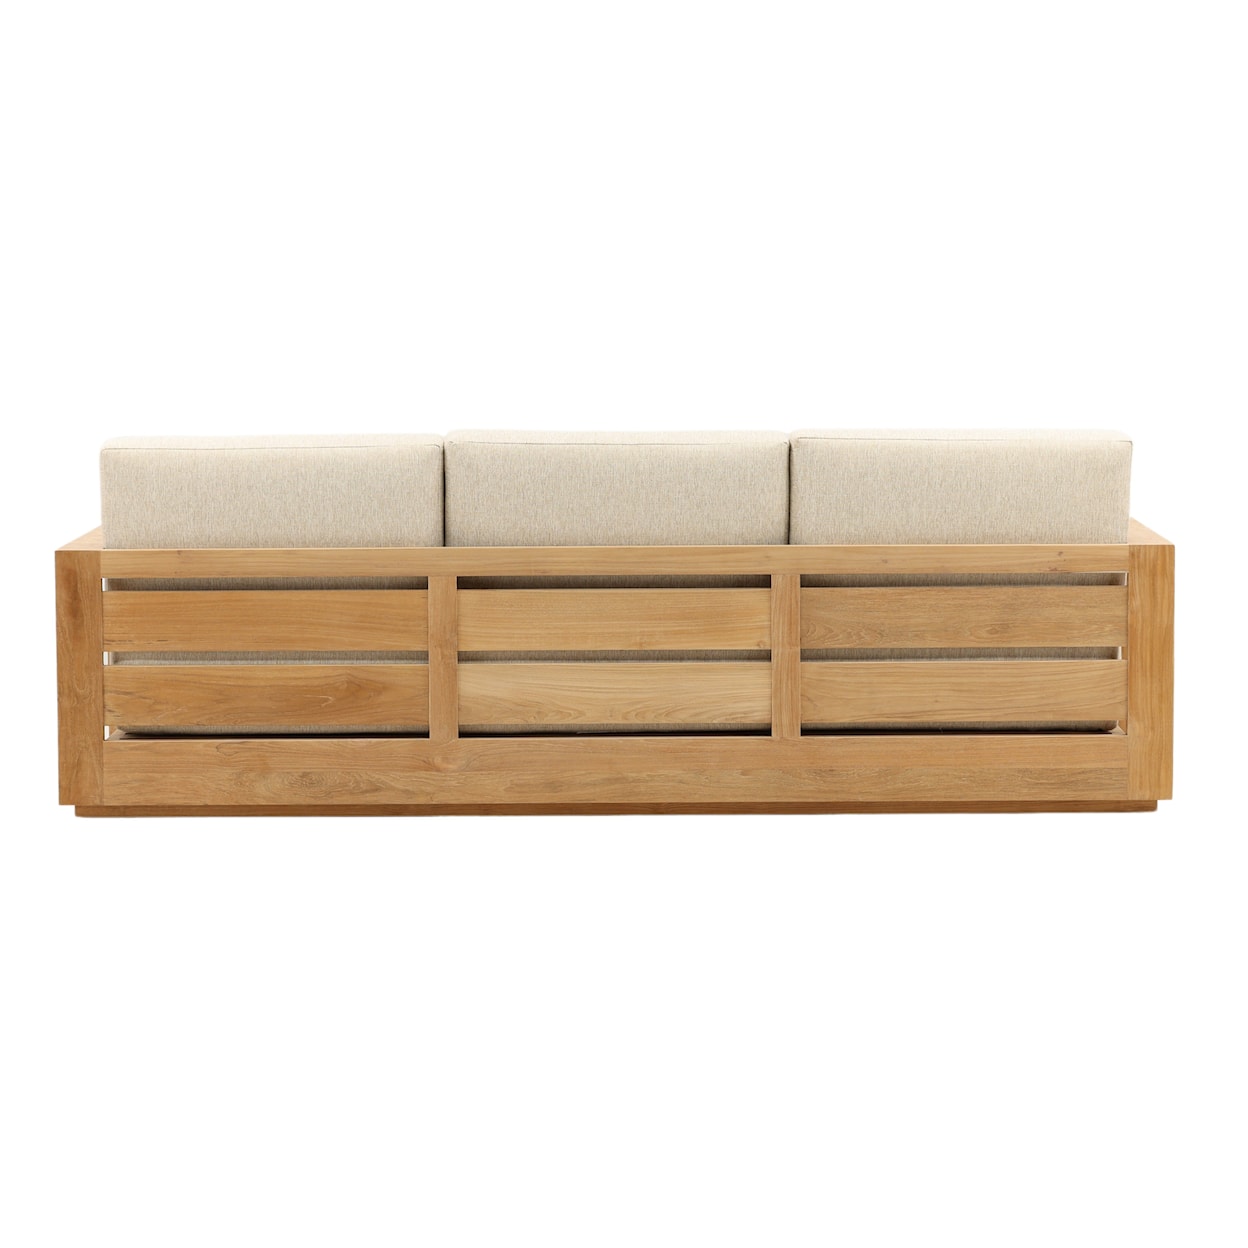 Dovetail Furniture DOV7800 Outdoor Sofa